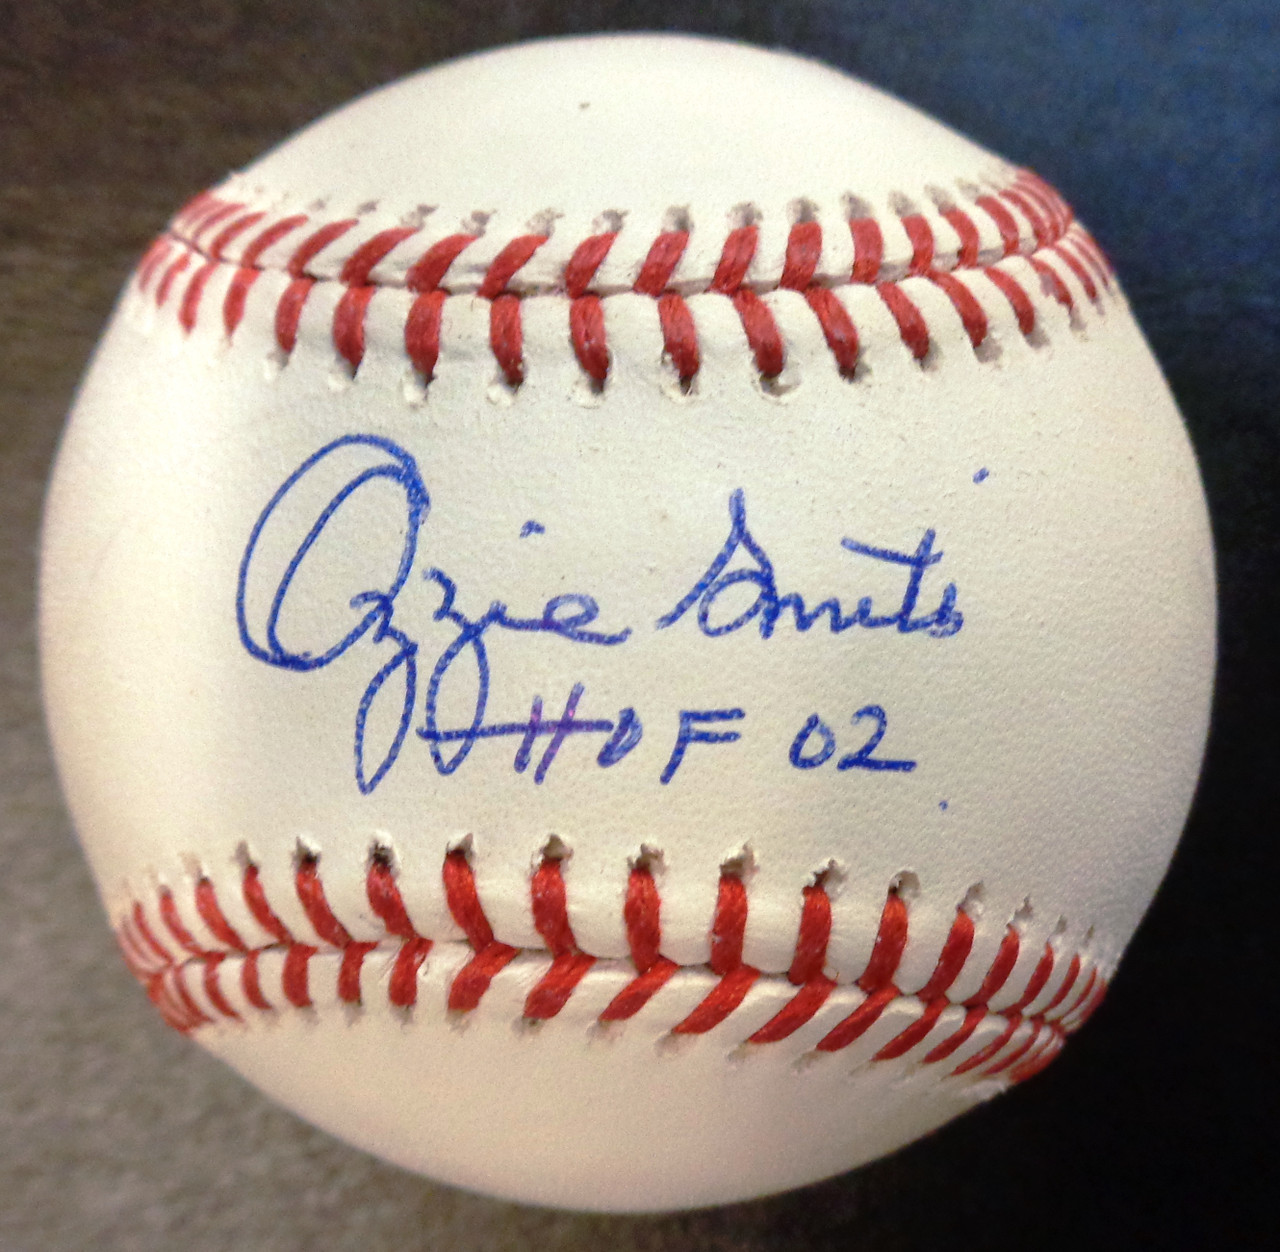 Ozzie Smith Autographed Official Major League Baseball w/ HOF 02